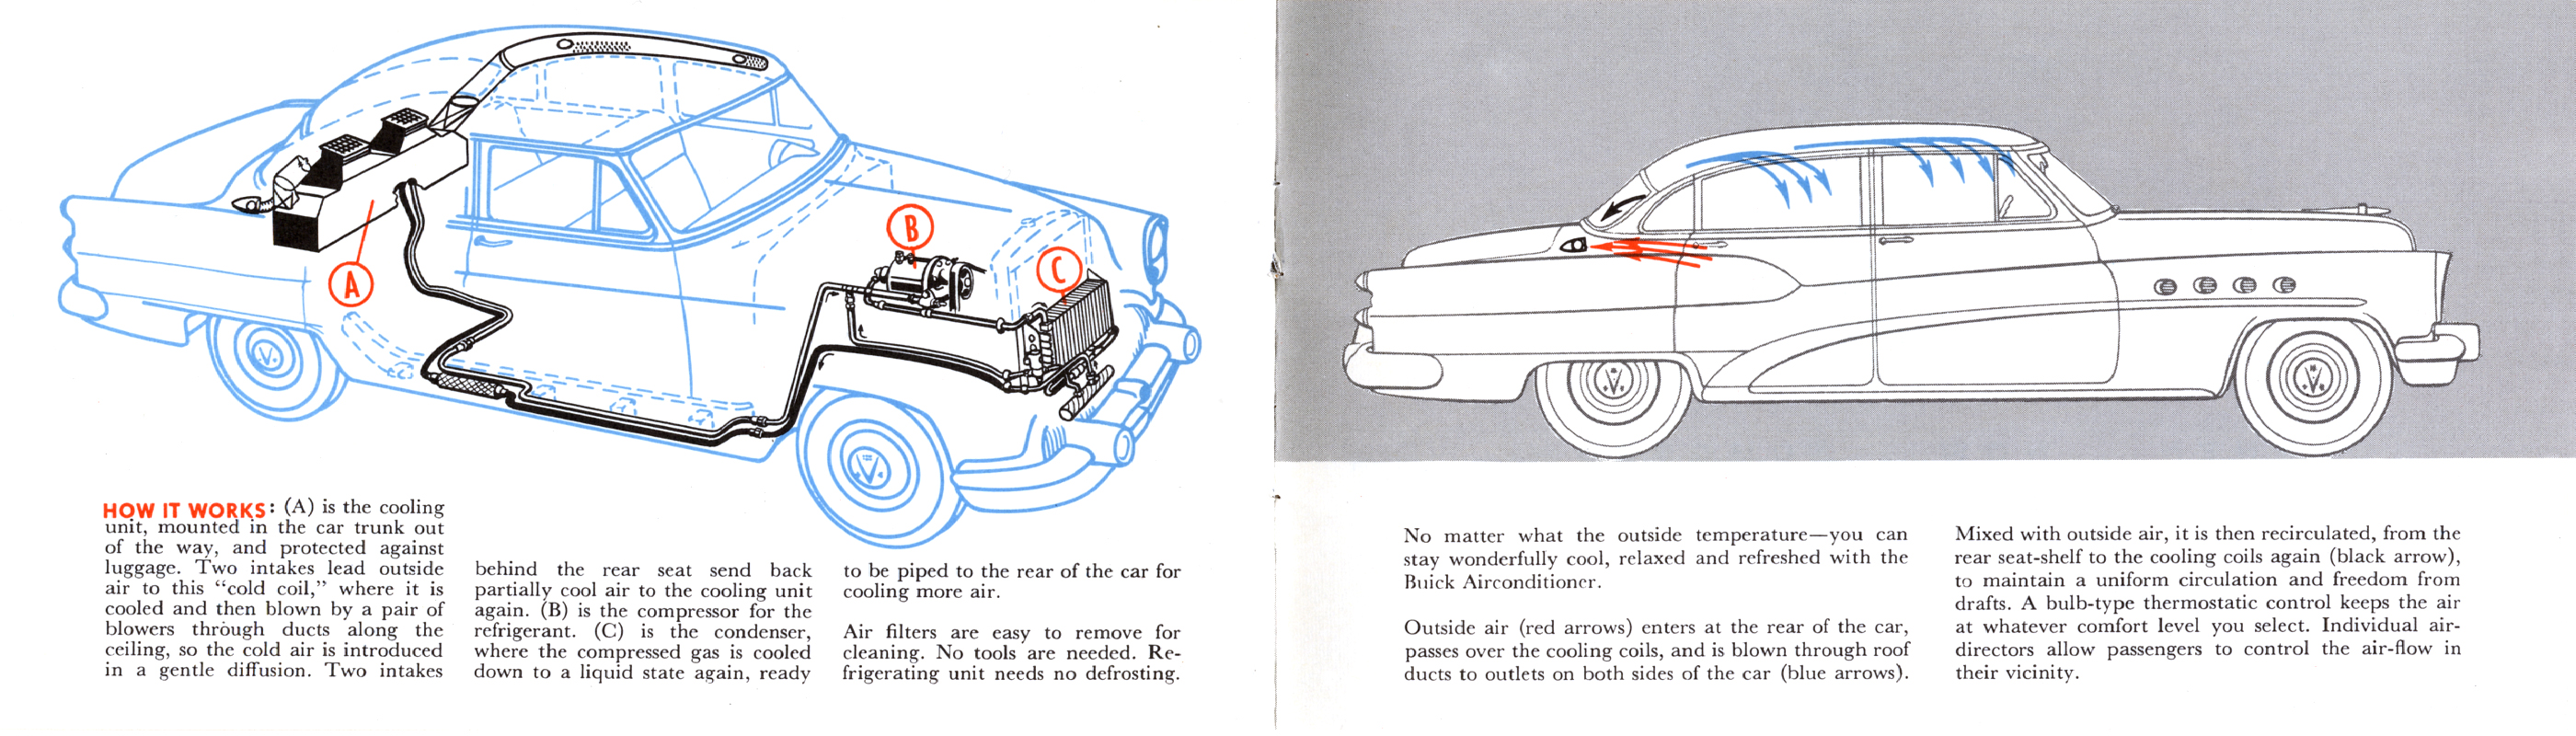 1953 Buick Heating and AC Folder-10-11